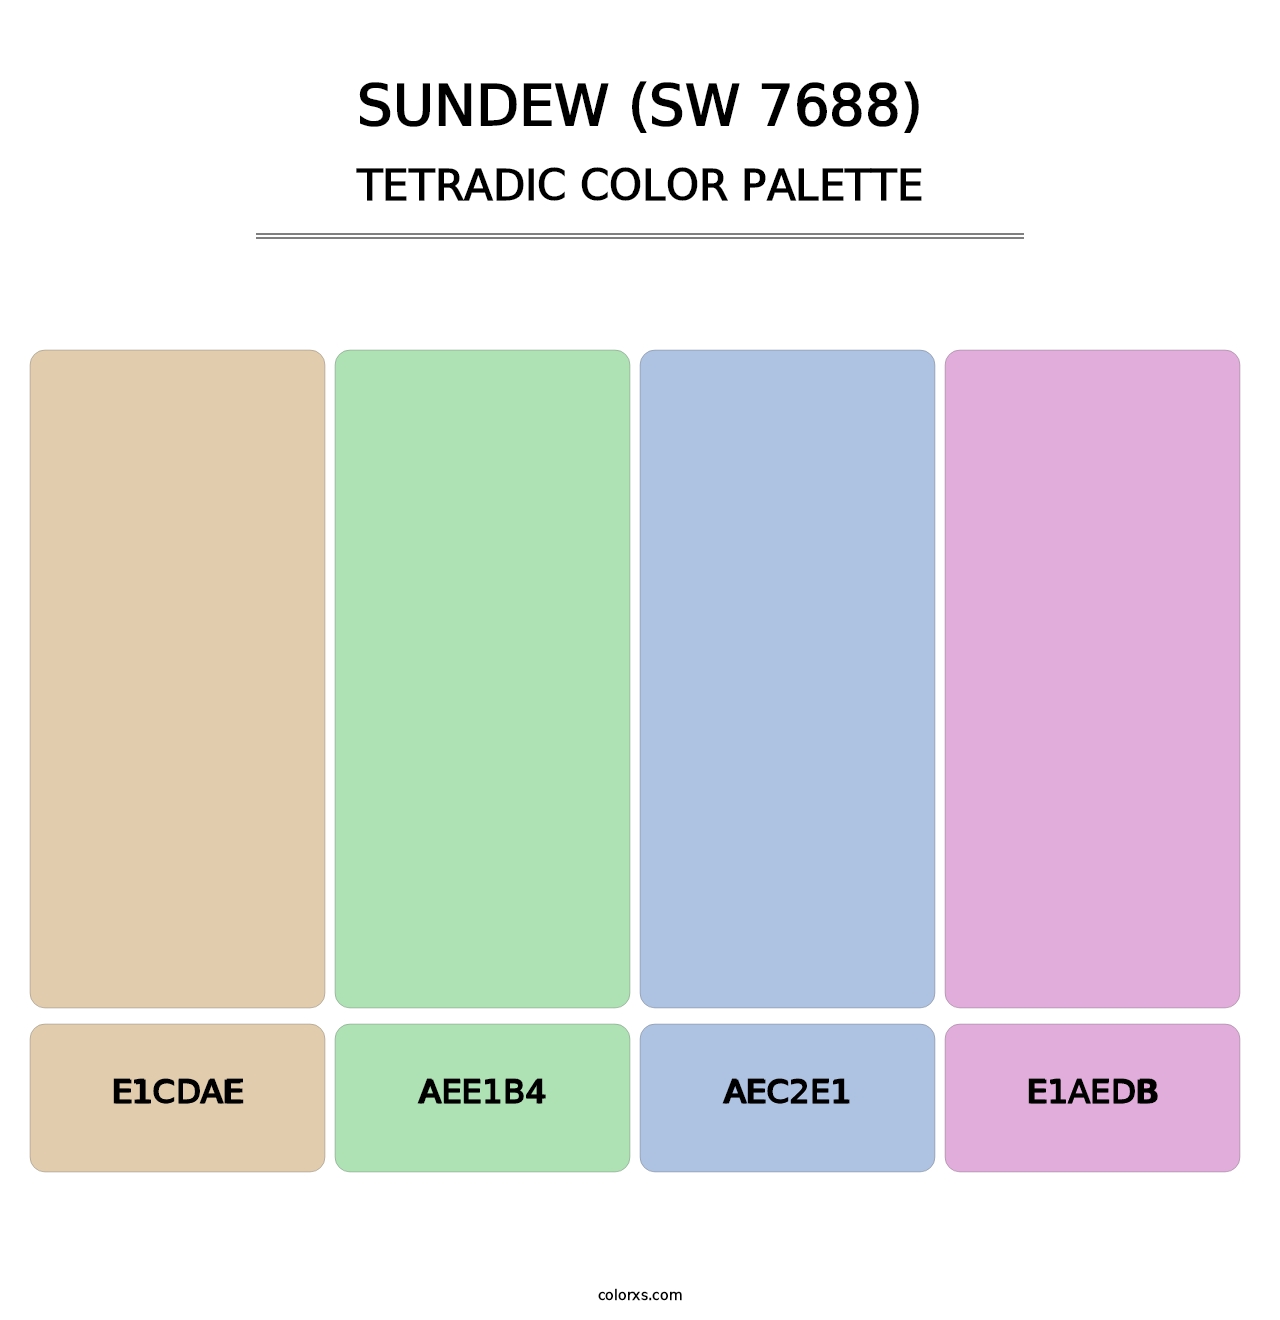 Sundew (SW 7688) - Tetradic Color Palette